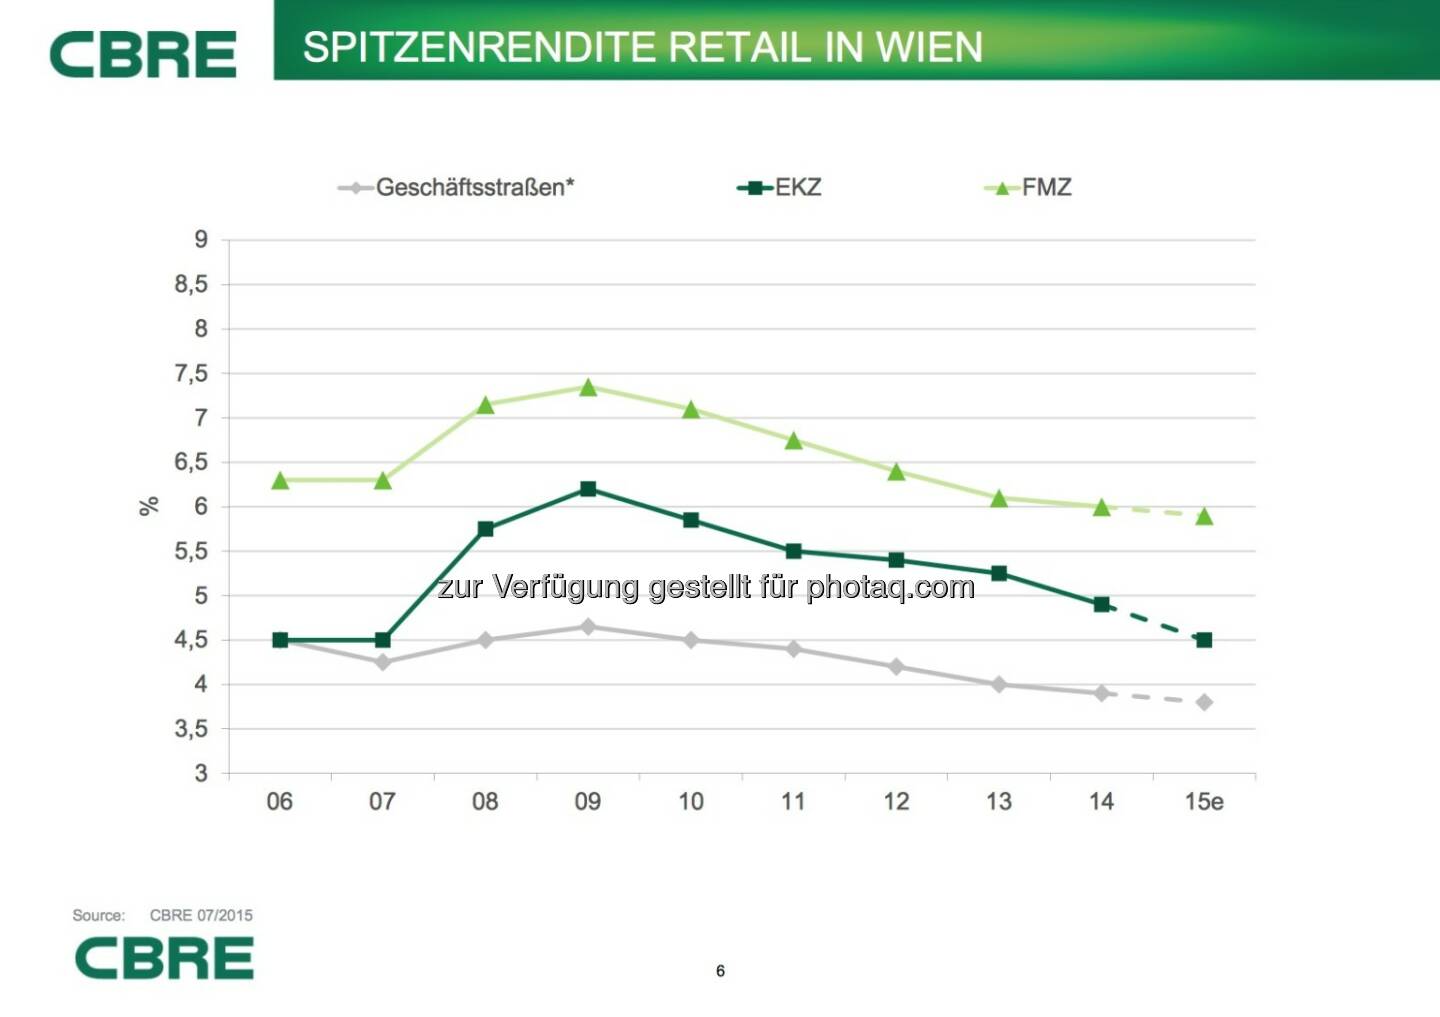 Cbre: Spitzenrendite Retail in Wien